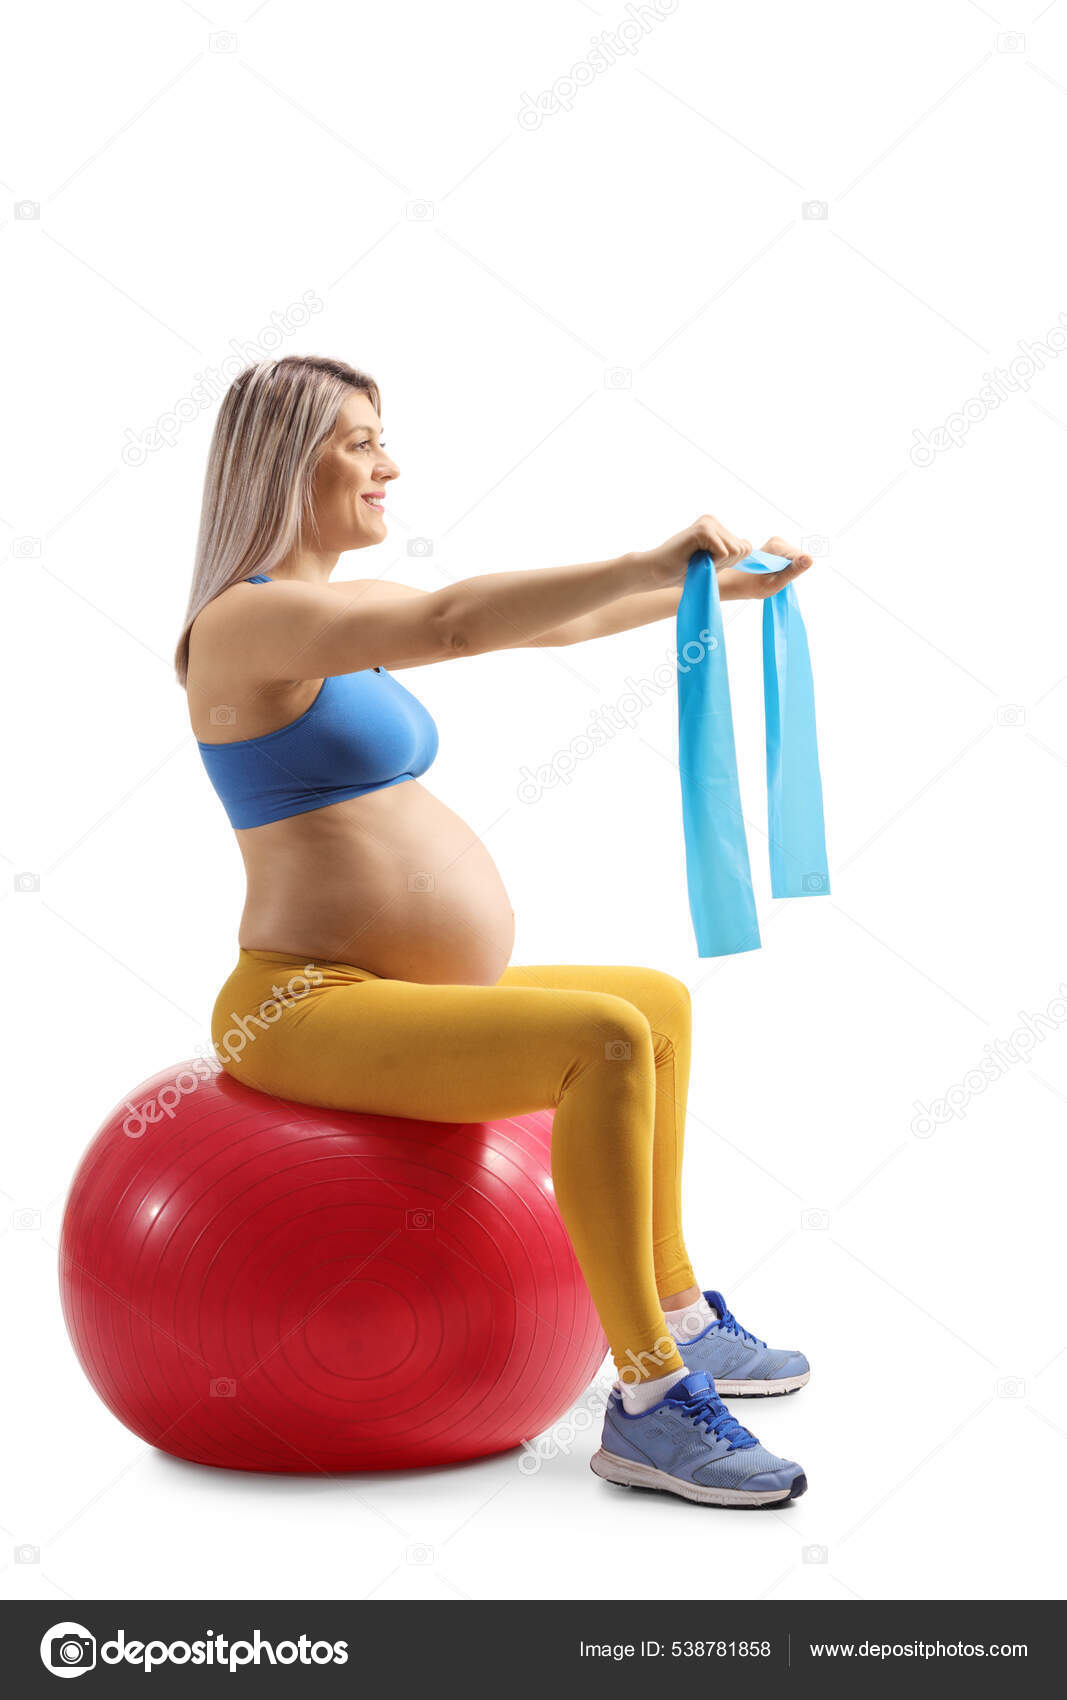 https://st.depositphotos.com/3332767/53878/i/1600/depositphotos_538781858-stock-photo-full-length-profile-shot-pregnant.jpg